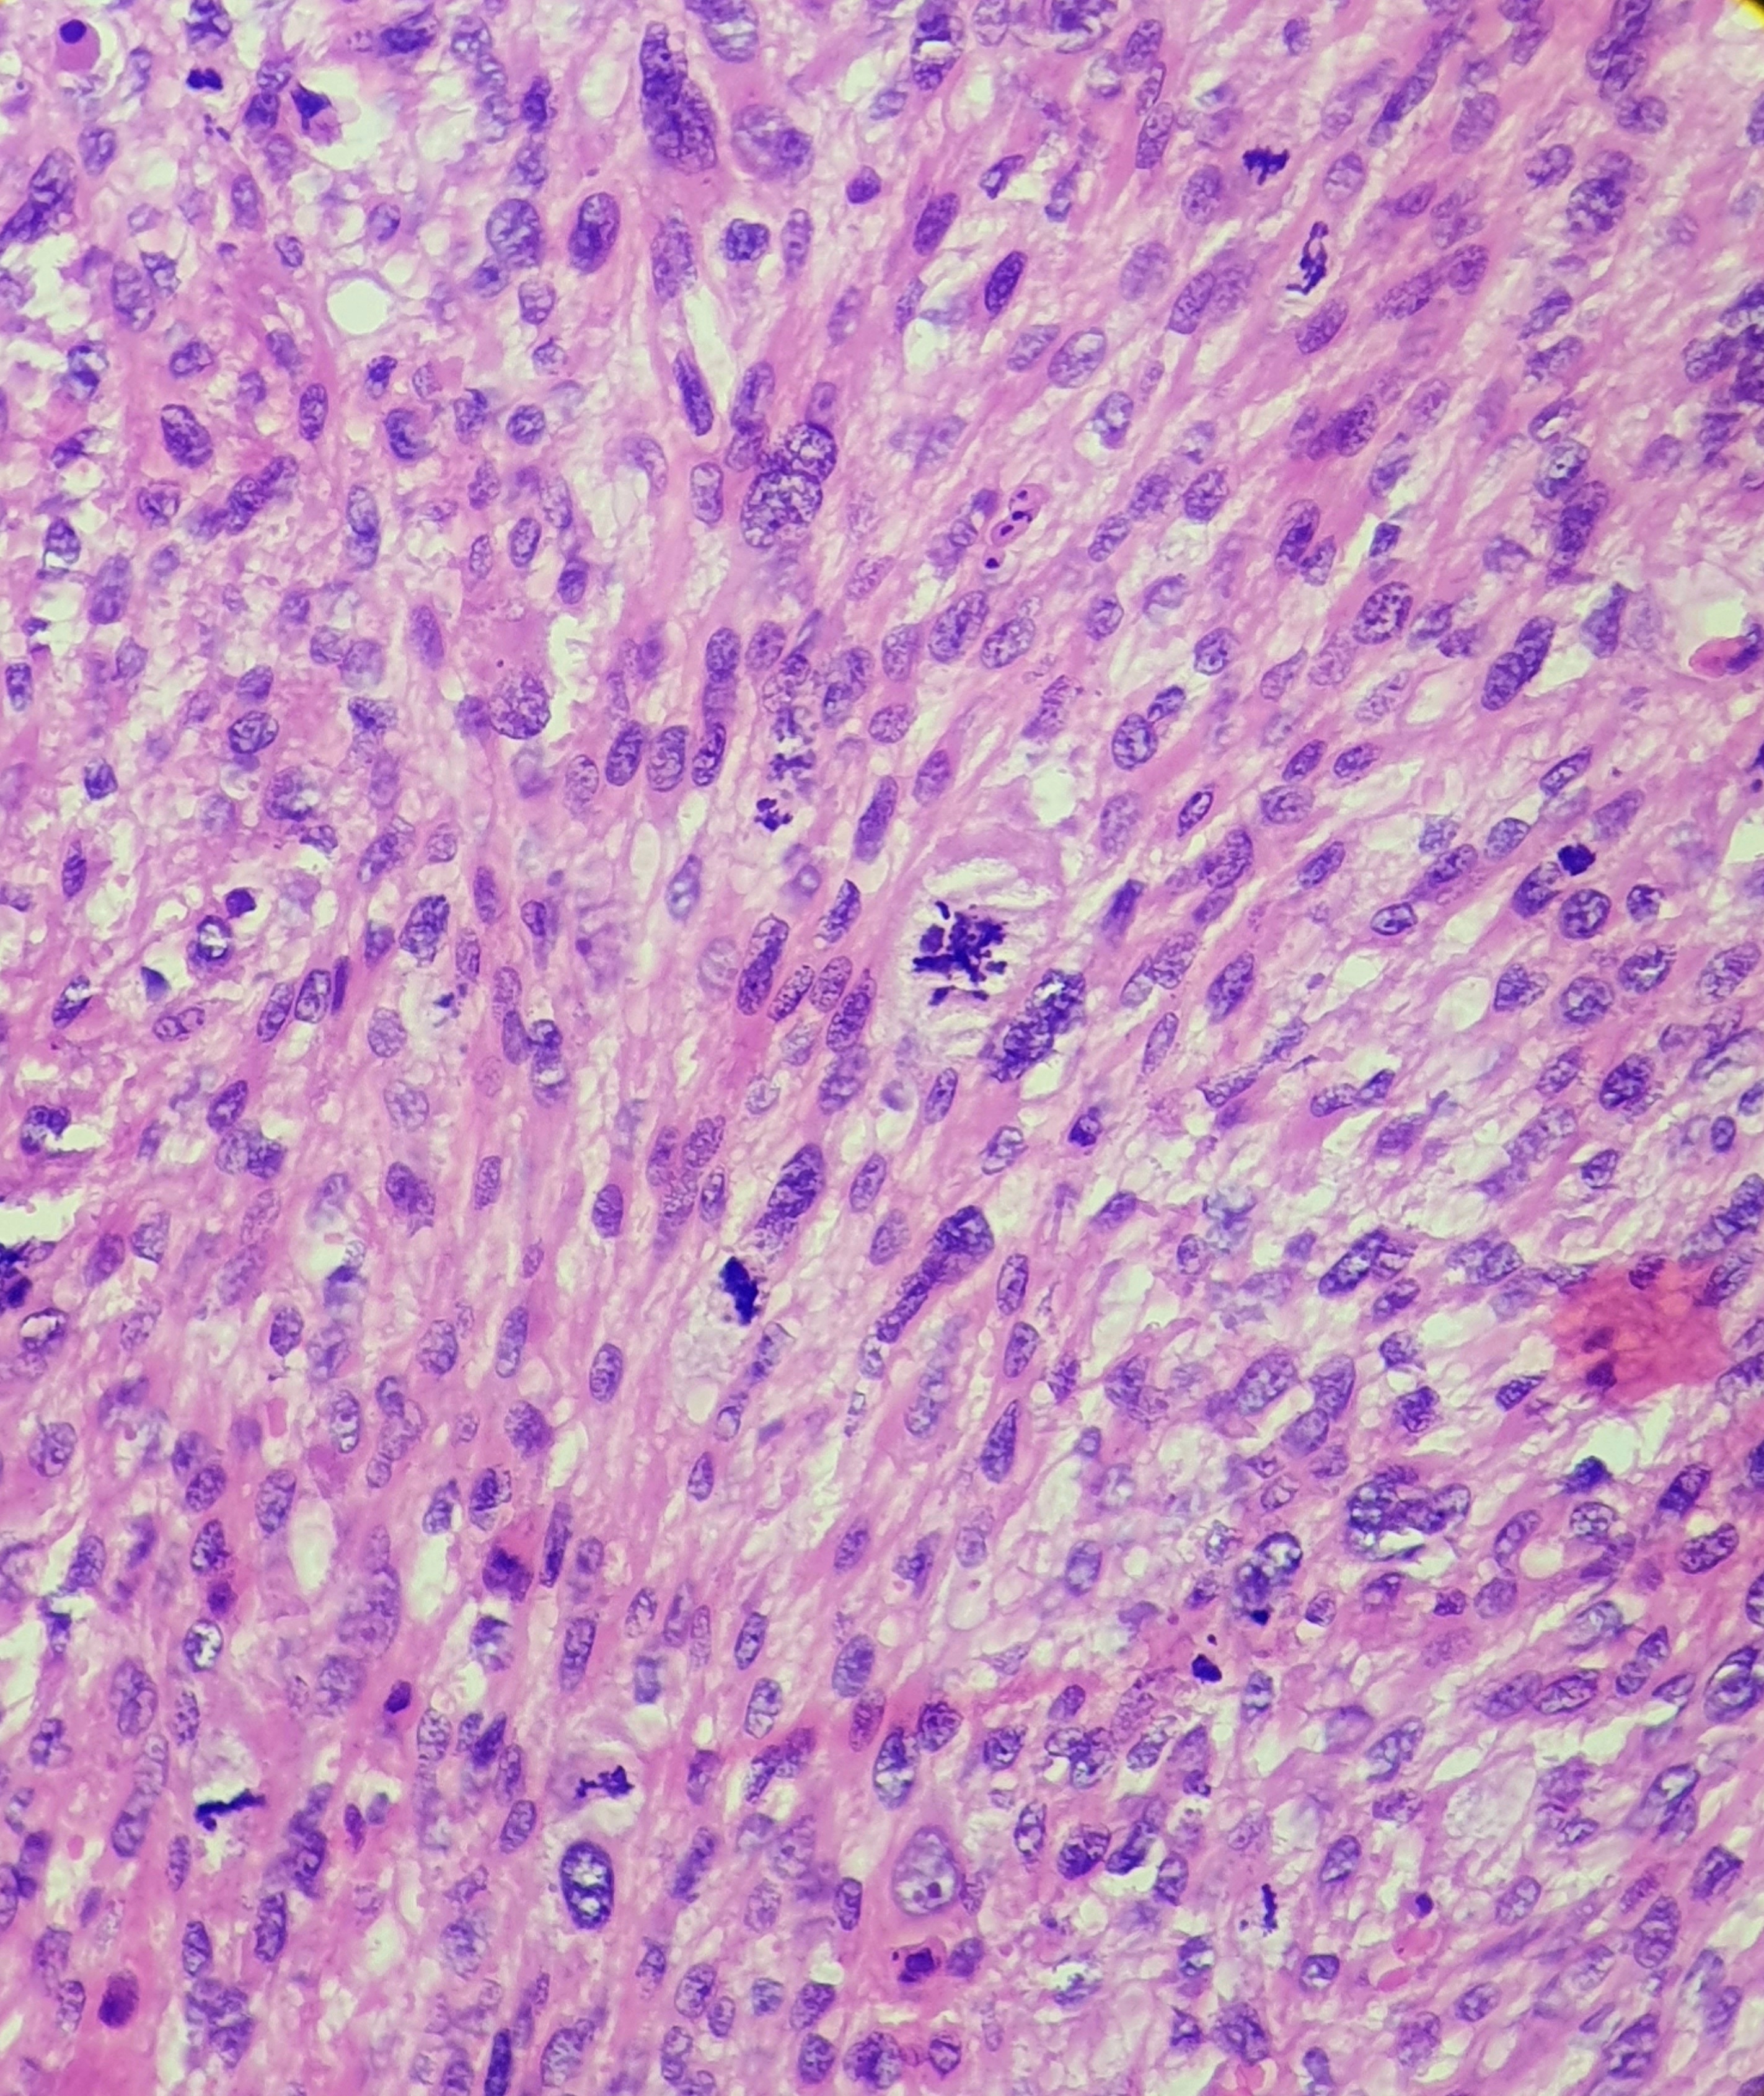 Undifferentiated Pleomorphic Sarcoma. Pleomorphic cells with abundant atypical mitoses. 
